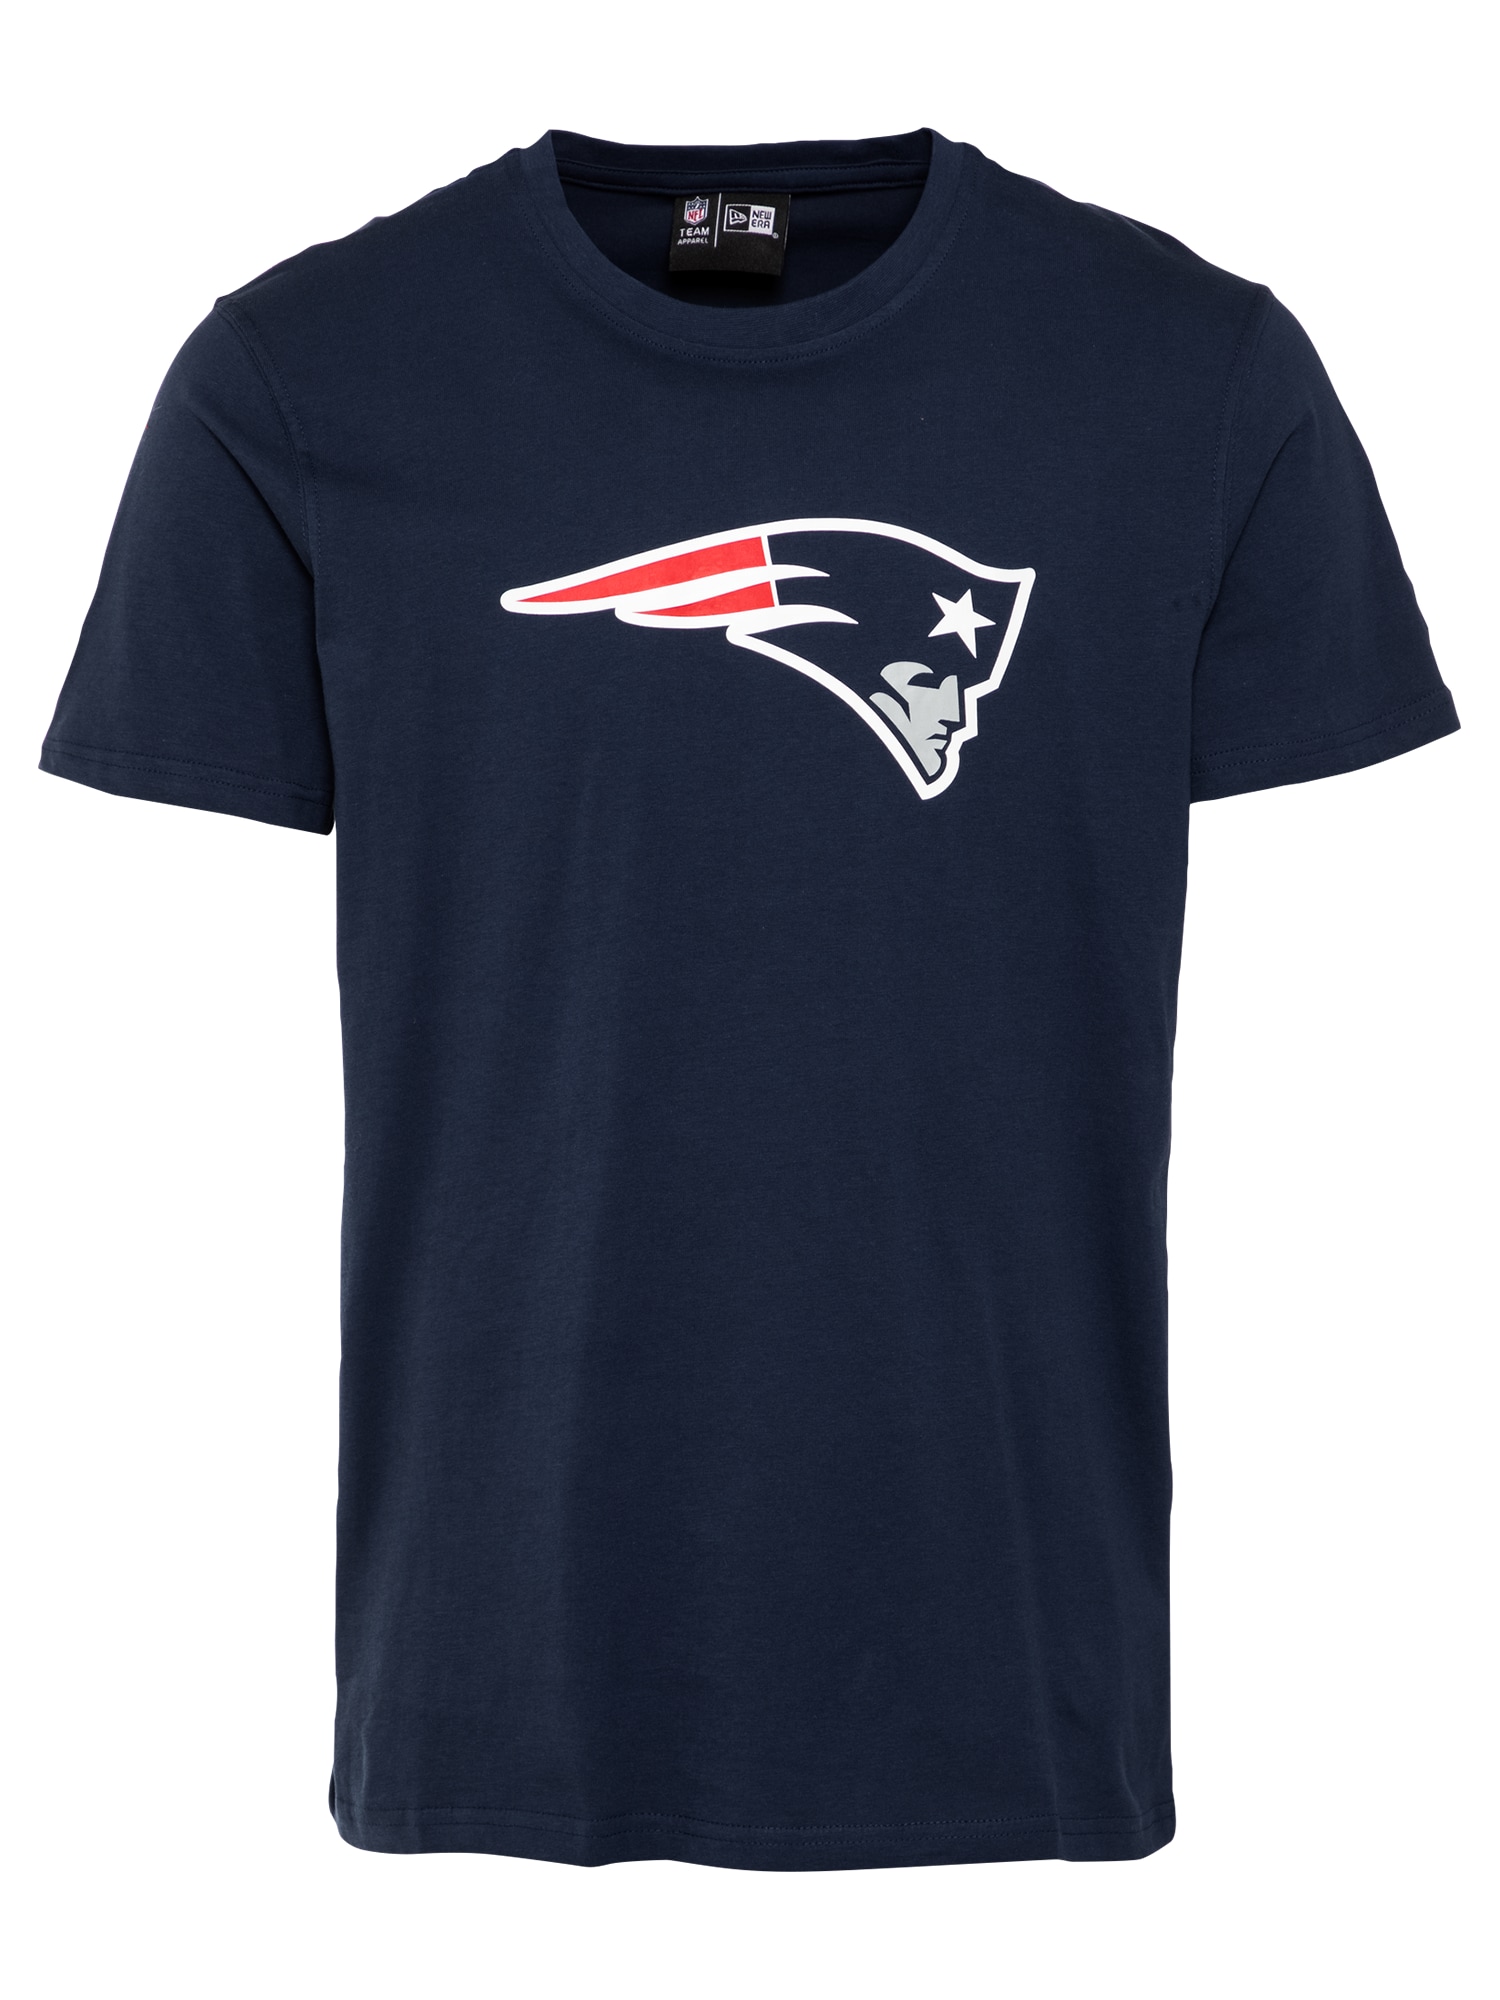 Shirt 'New England Patriots' new era